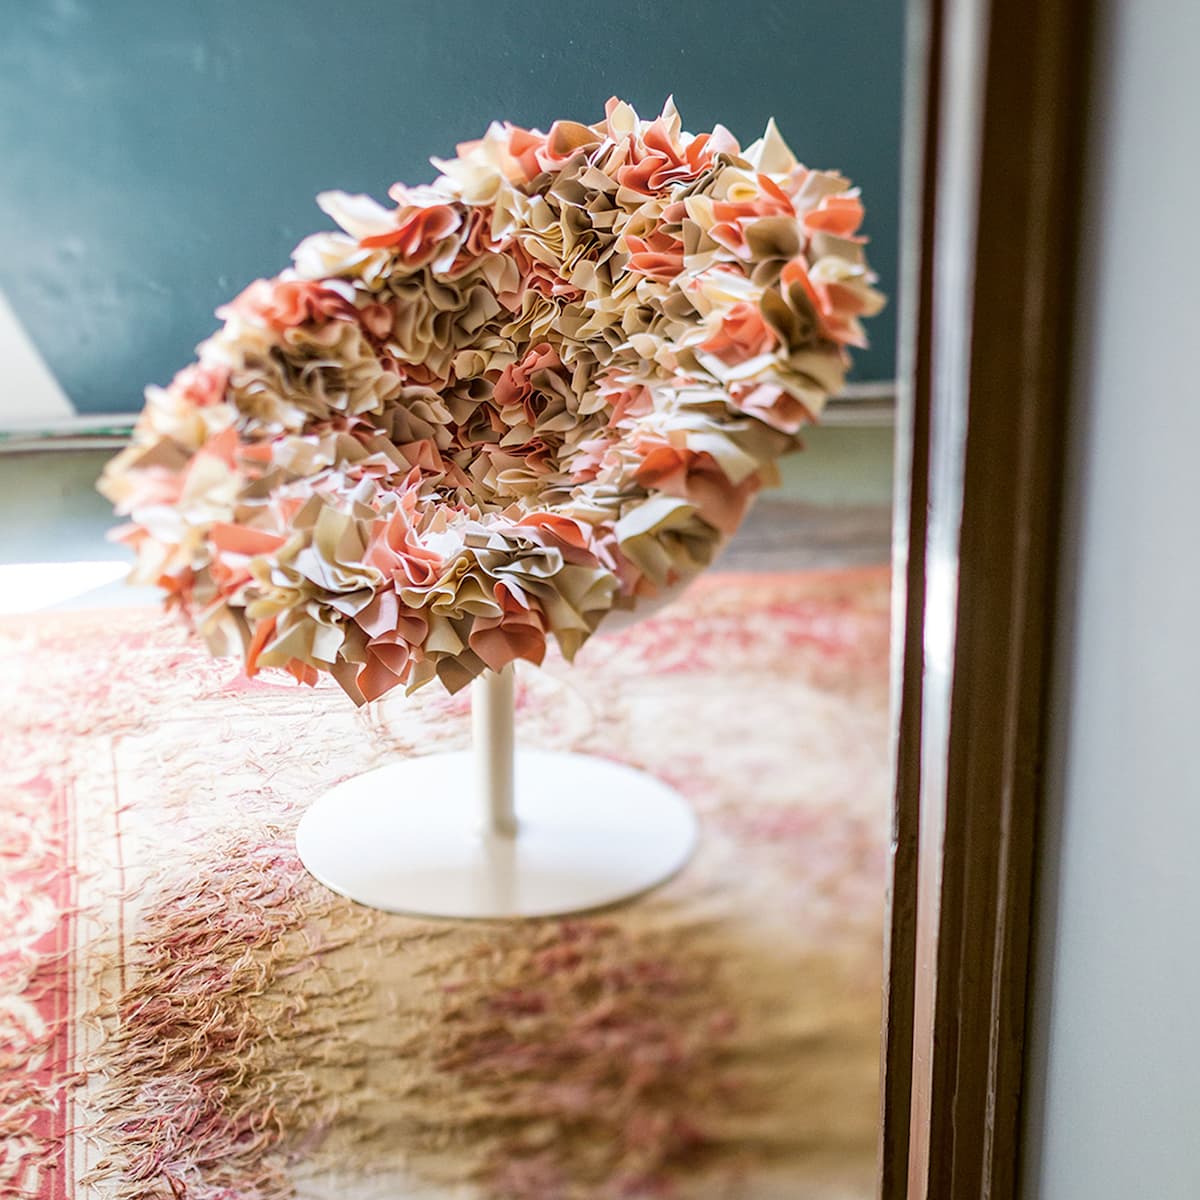 Blossom Vase by Tokujin Yoshioka - Art of Living - Home